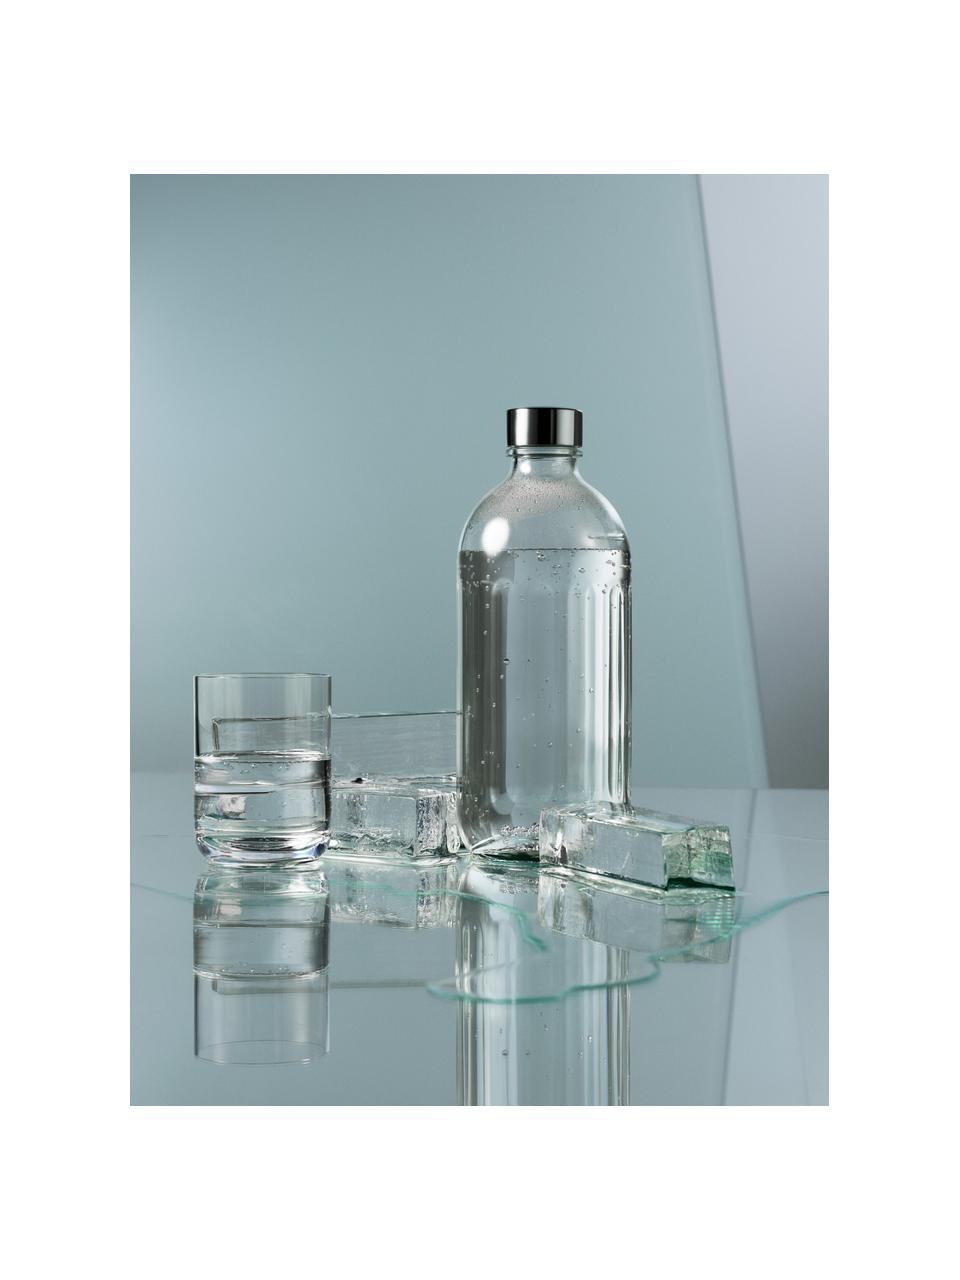 Glas-Wasserflaschen Carbonator Pro, 2 Stück, Verschluss: Metall, beschichtet, Transparent, Silberfarben, Ø 8 x H 26 cm, 700 ml